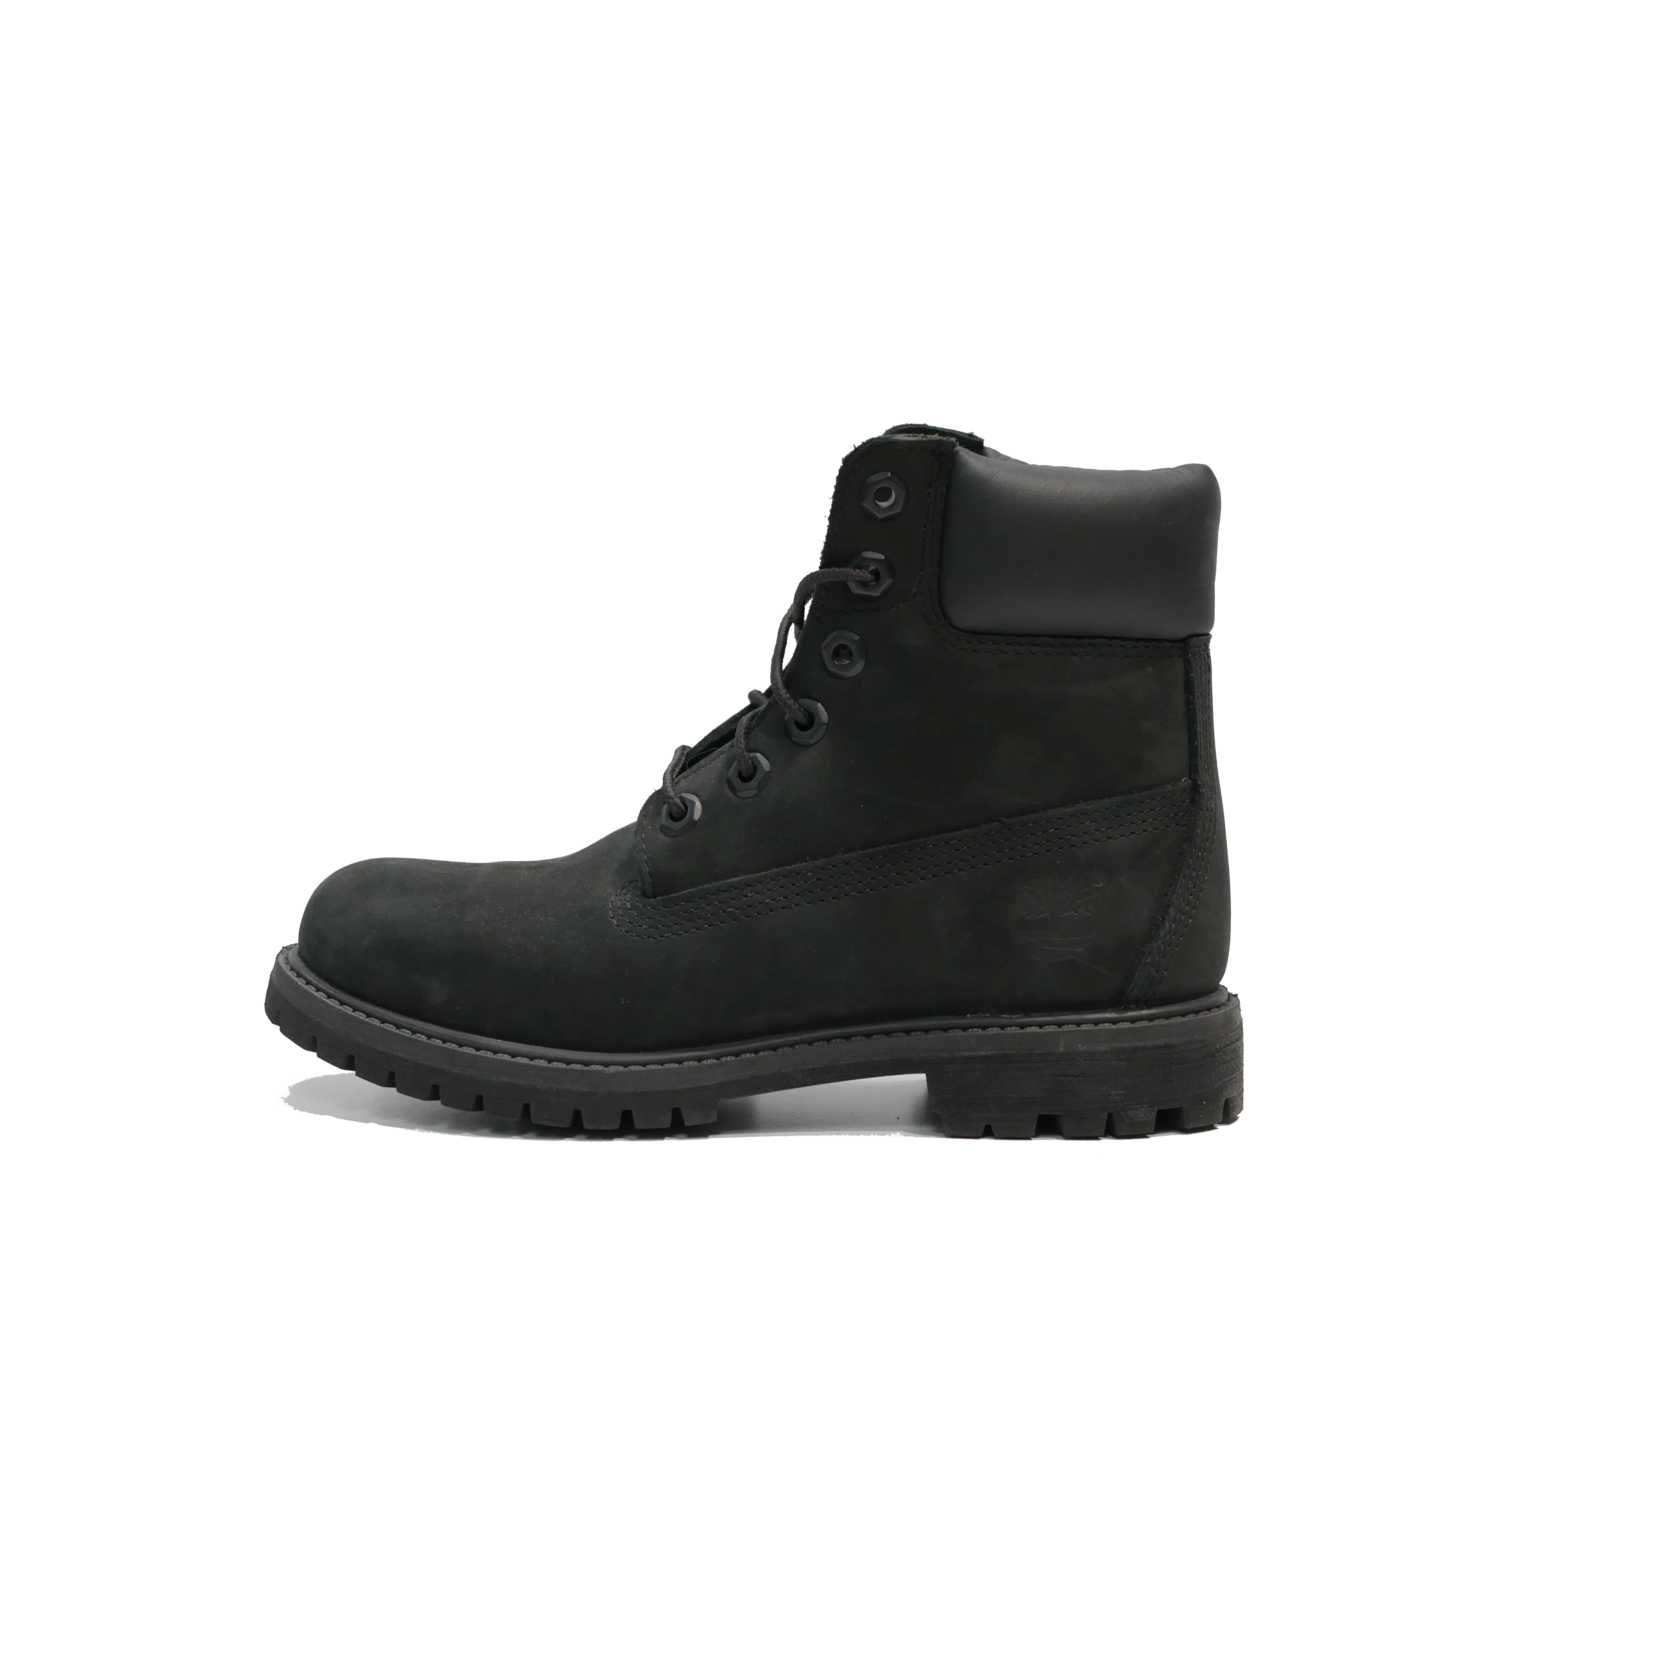 Timberland - Junior 6IN Premium Boot Black Nubuck TB012907 001 - Sam Tabak